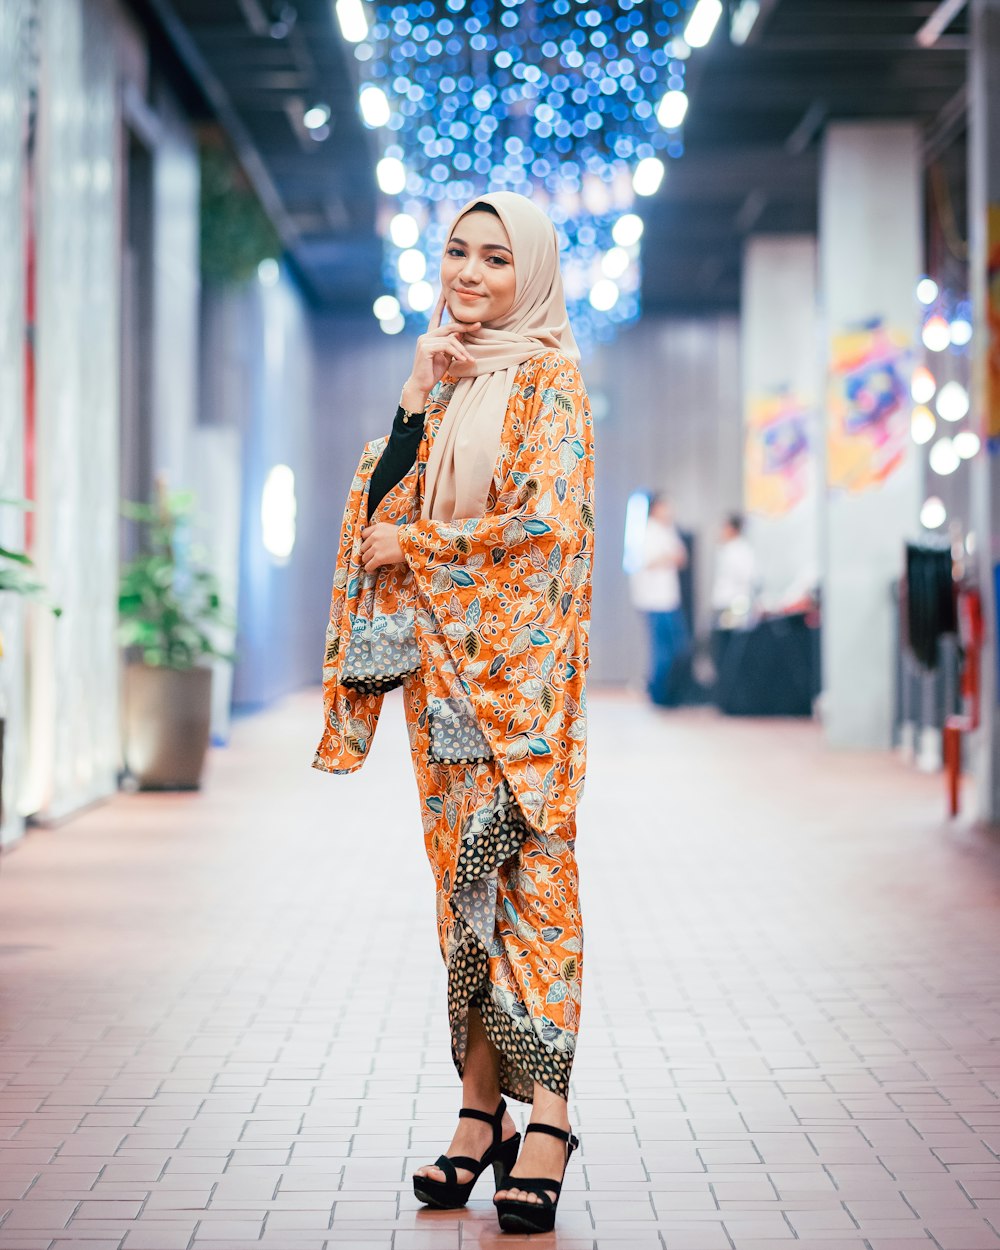 Woman wearing orange and multicolored abaya dress standing and smiling  photo – Free Muslim girl Image on Unsplash